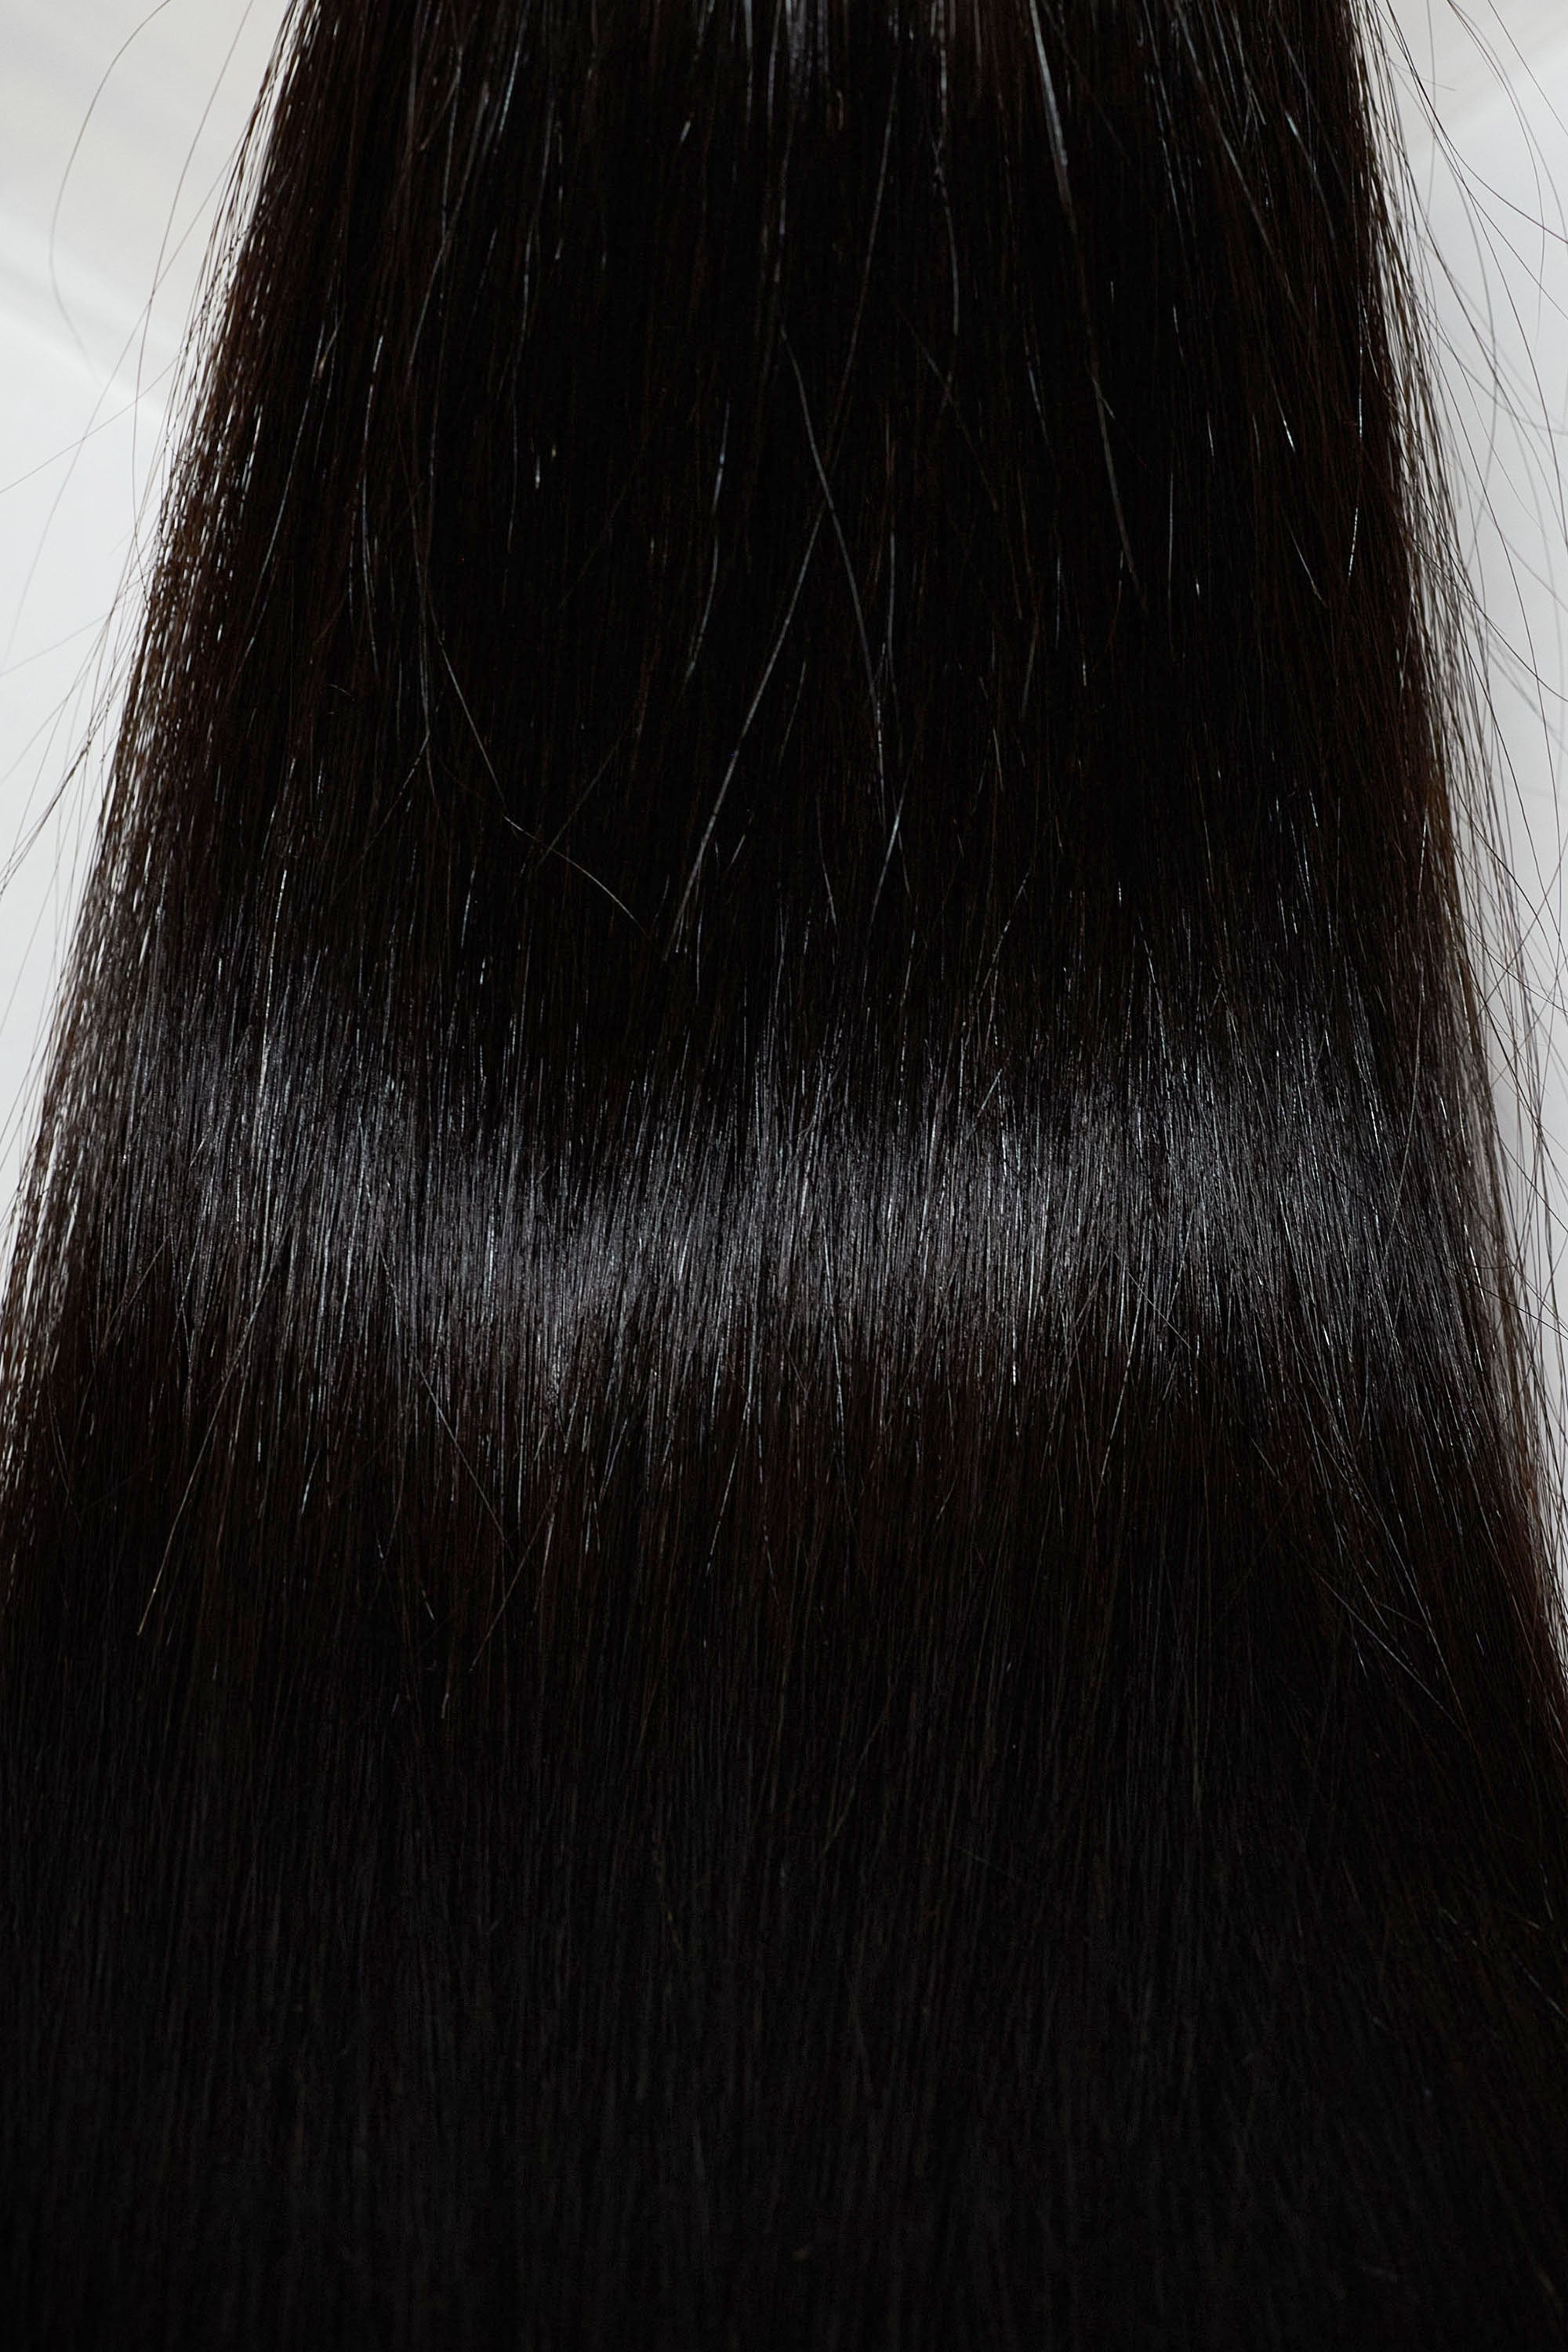 Behair professional Keratin Tip "Premium" 24" (60cm) Natural Straight Jet Black #1 - 25g (Micro - 0.5g each pcs) hair extensions